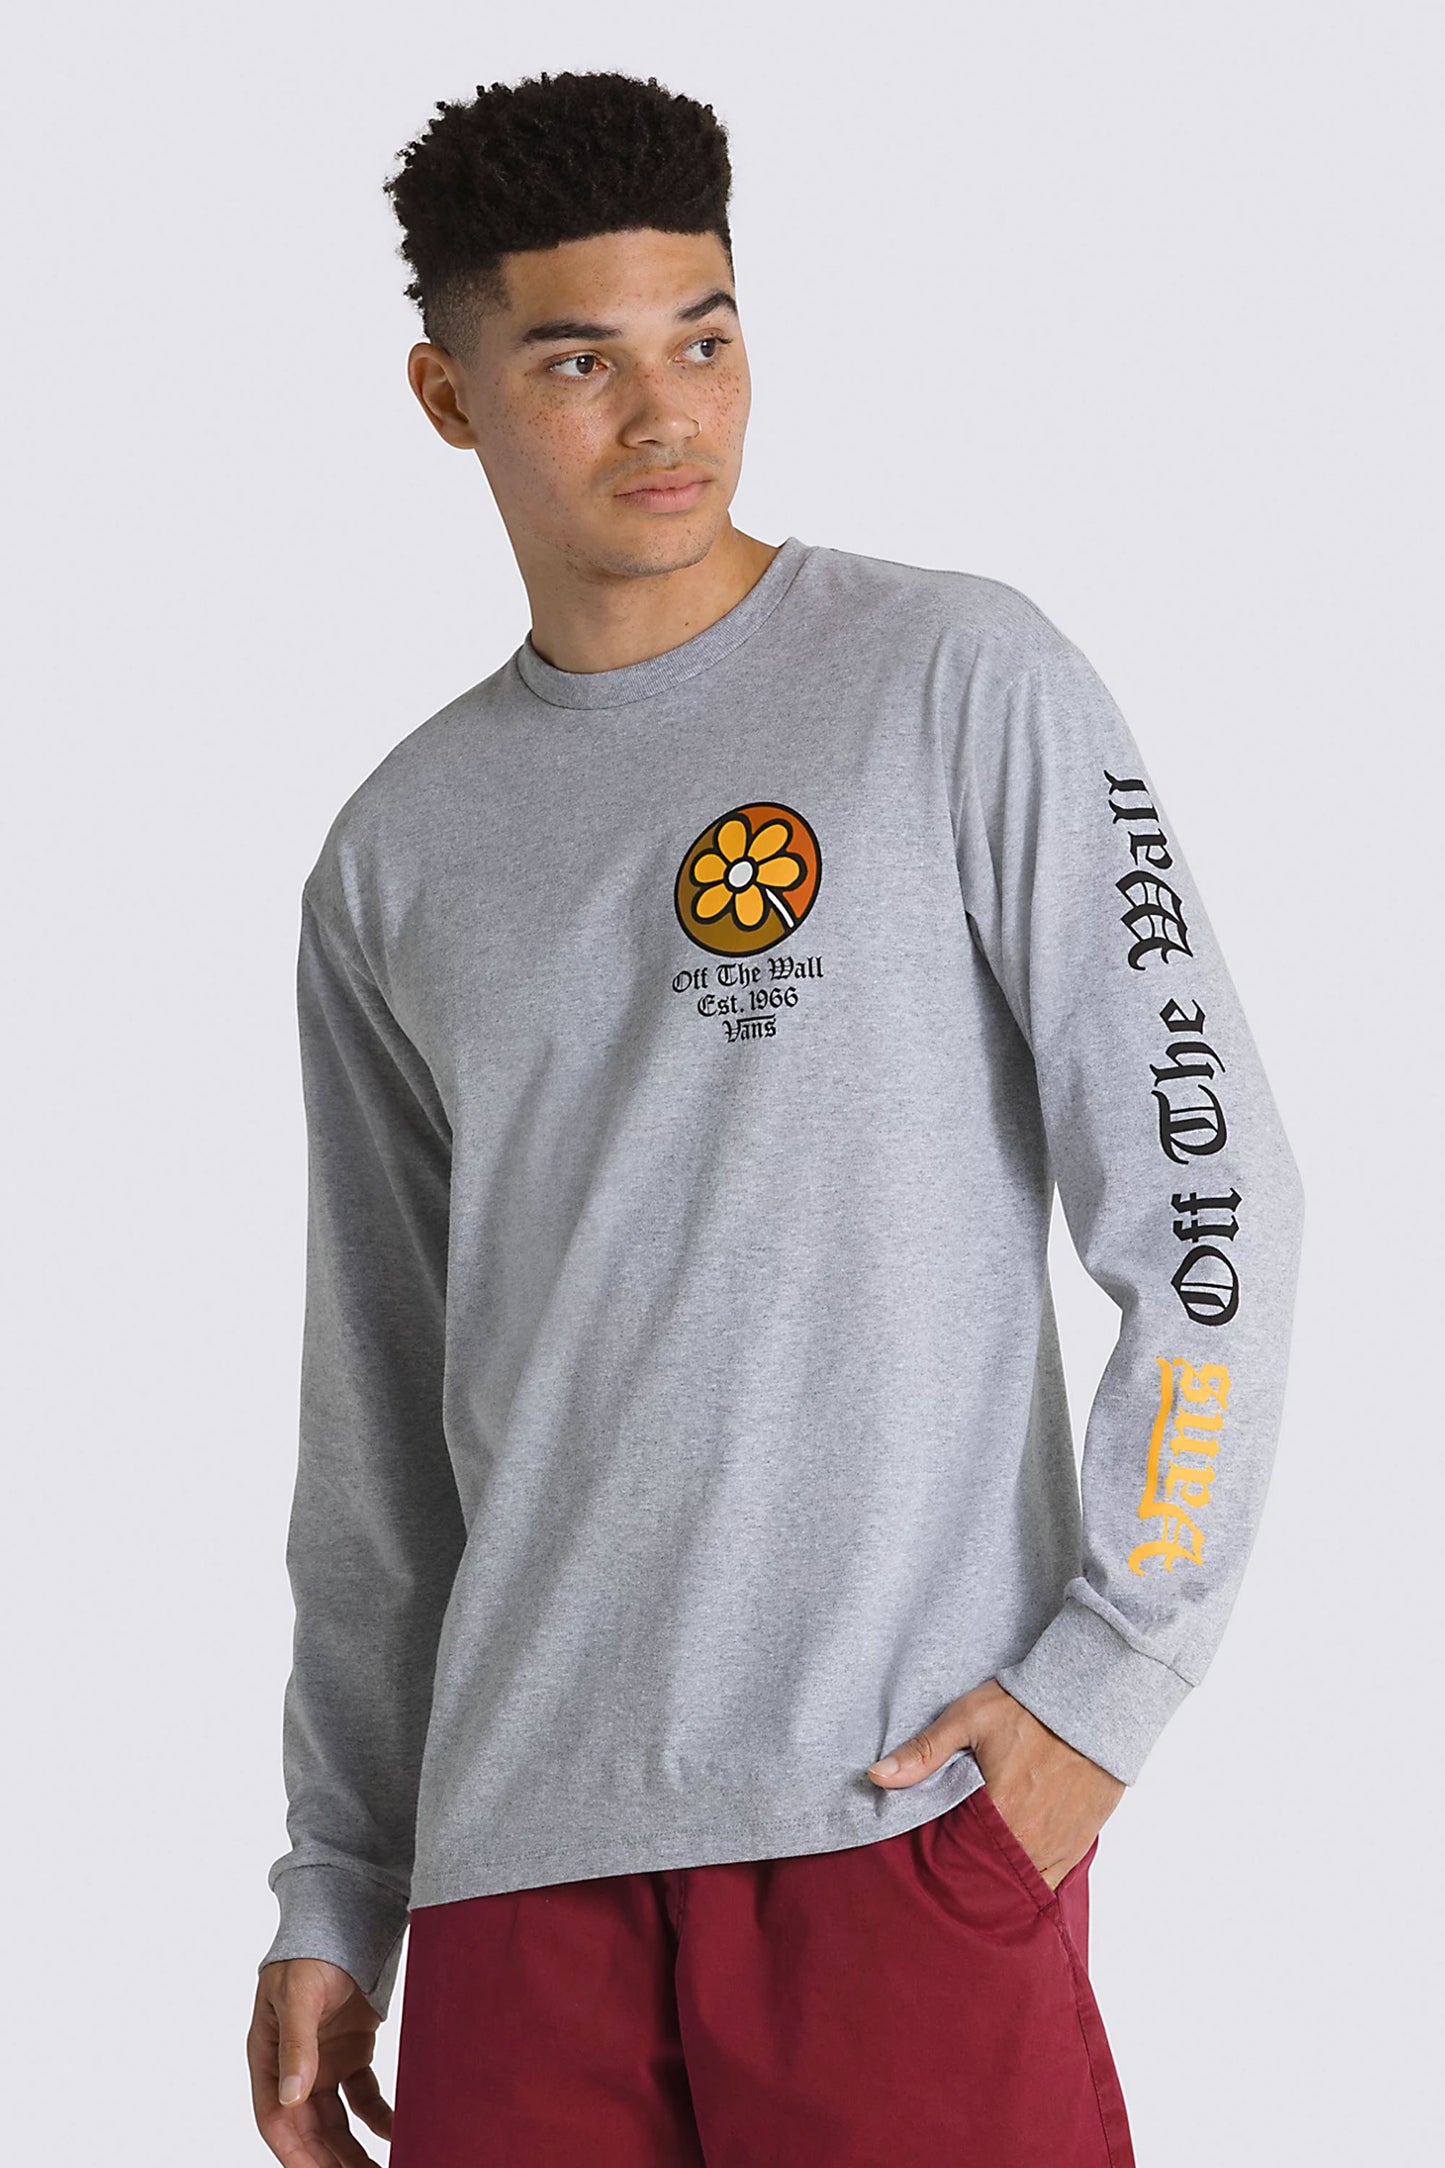 Pukas-Surf-Shop-Vans-man-tee-old-english-floral-logo-long-sleeve